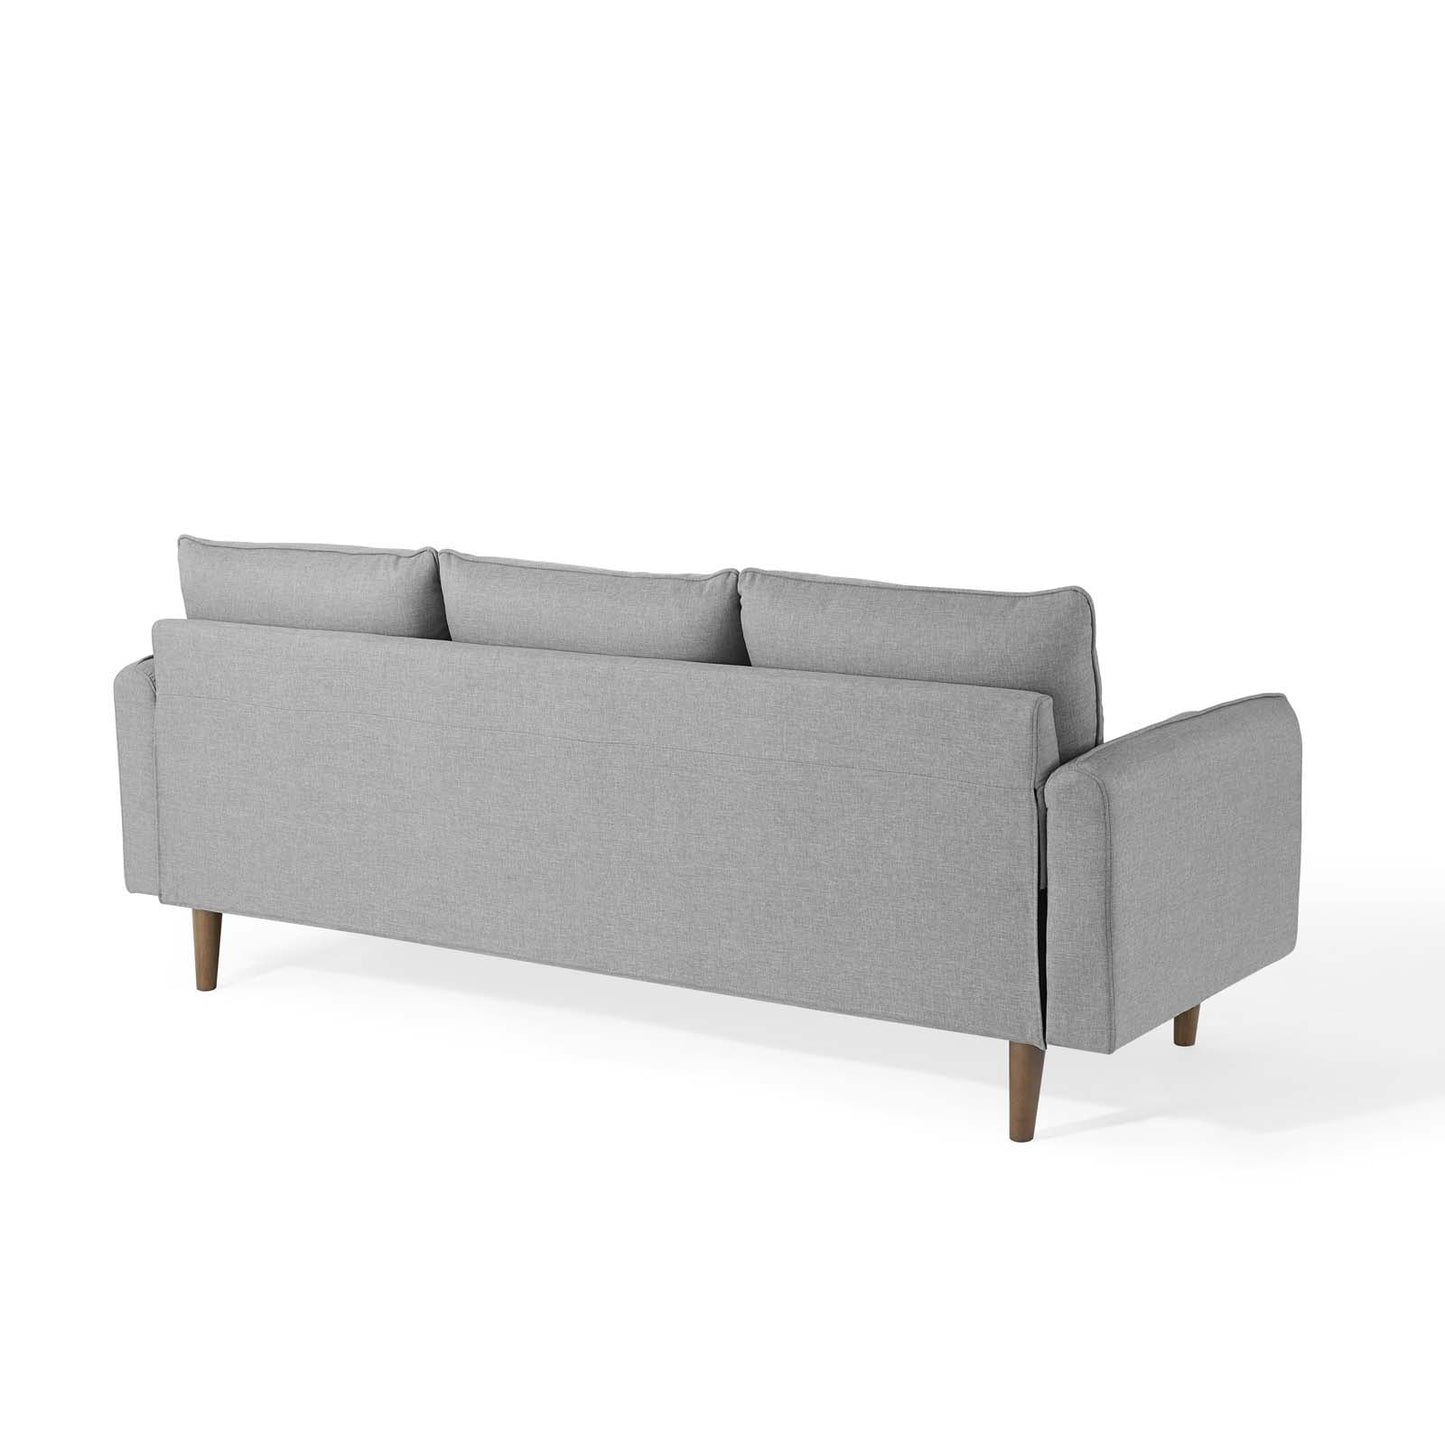 Revive Upholstered Right or Left Sectional Sofa Light Gray EEI-3867-LGR